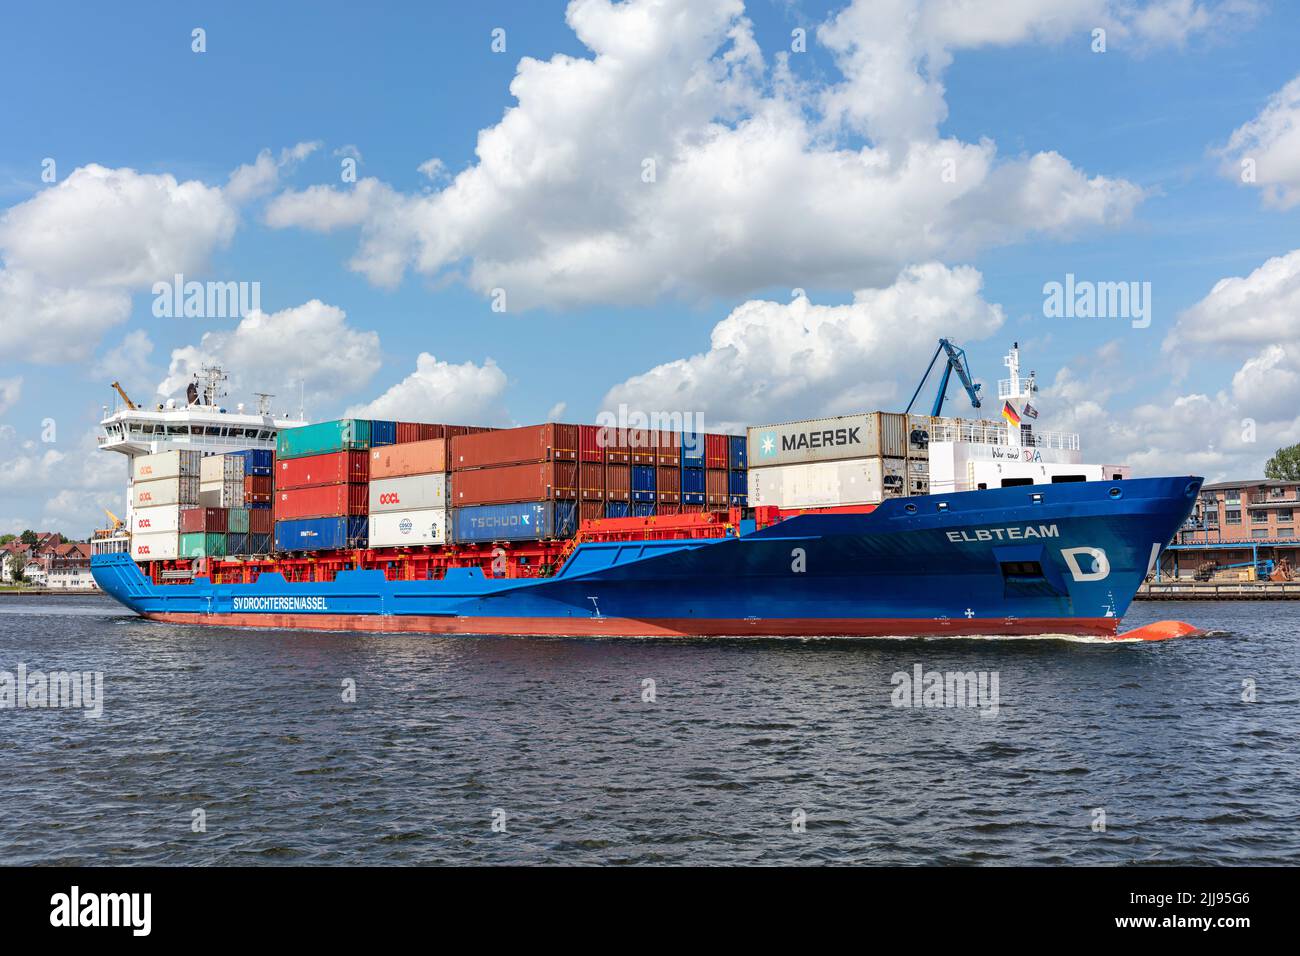 container ship ELBTEAM in the Kiel Canal Stock Photo